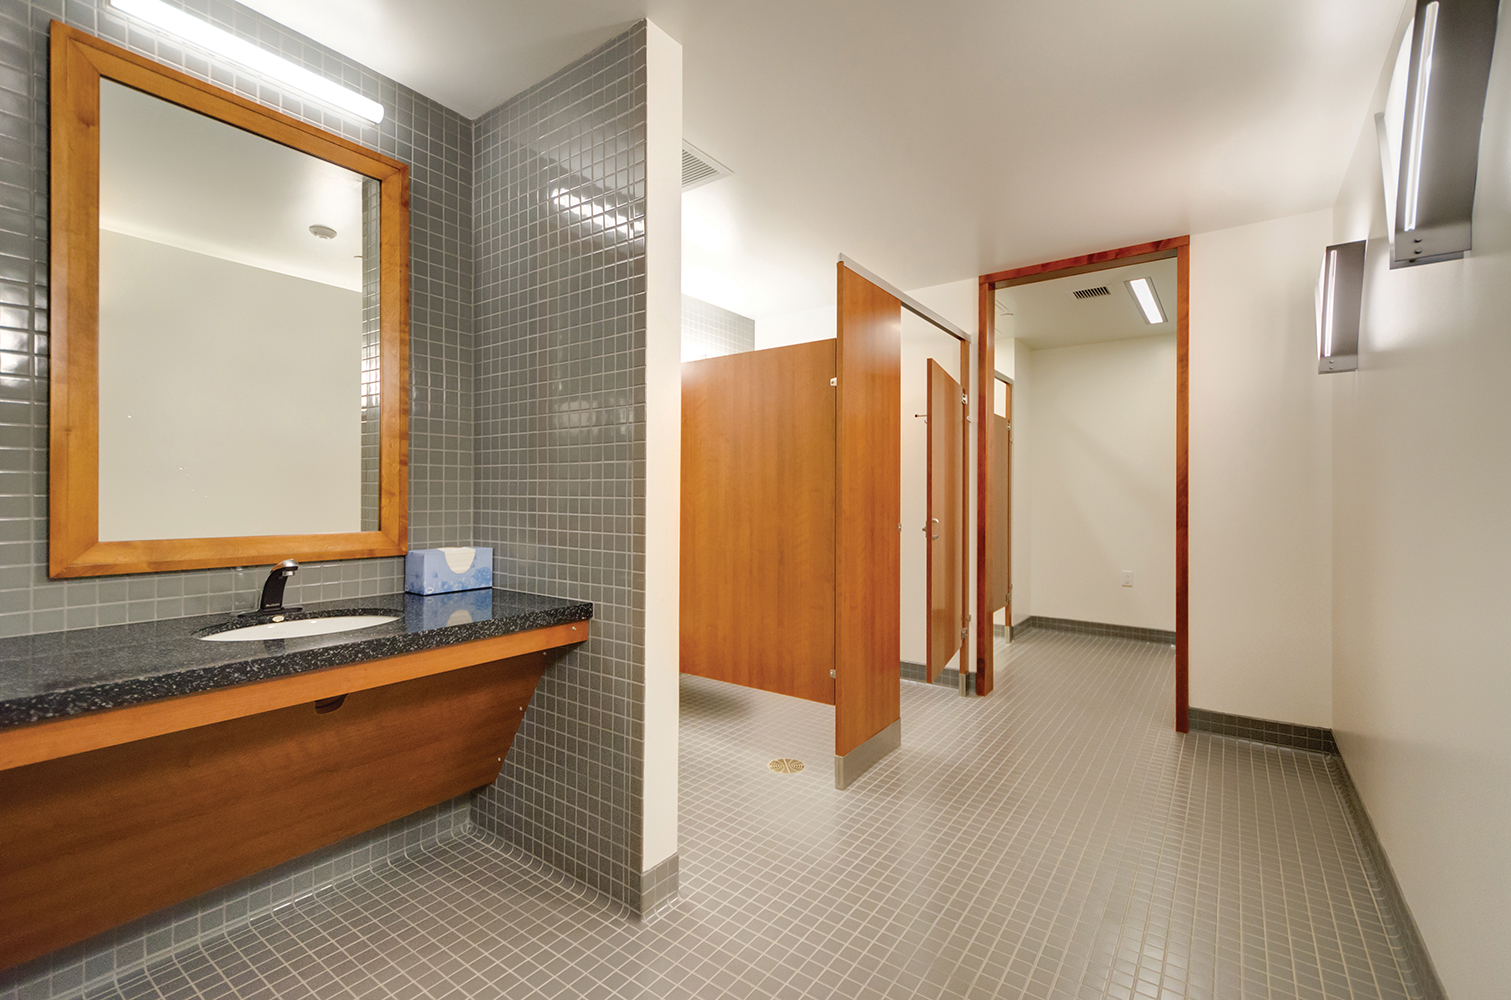 Voila modern vanity light fixtures illuminate a public restroom, mounted horizontally above a wood-framed mirror.